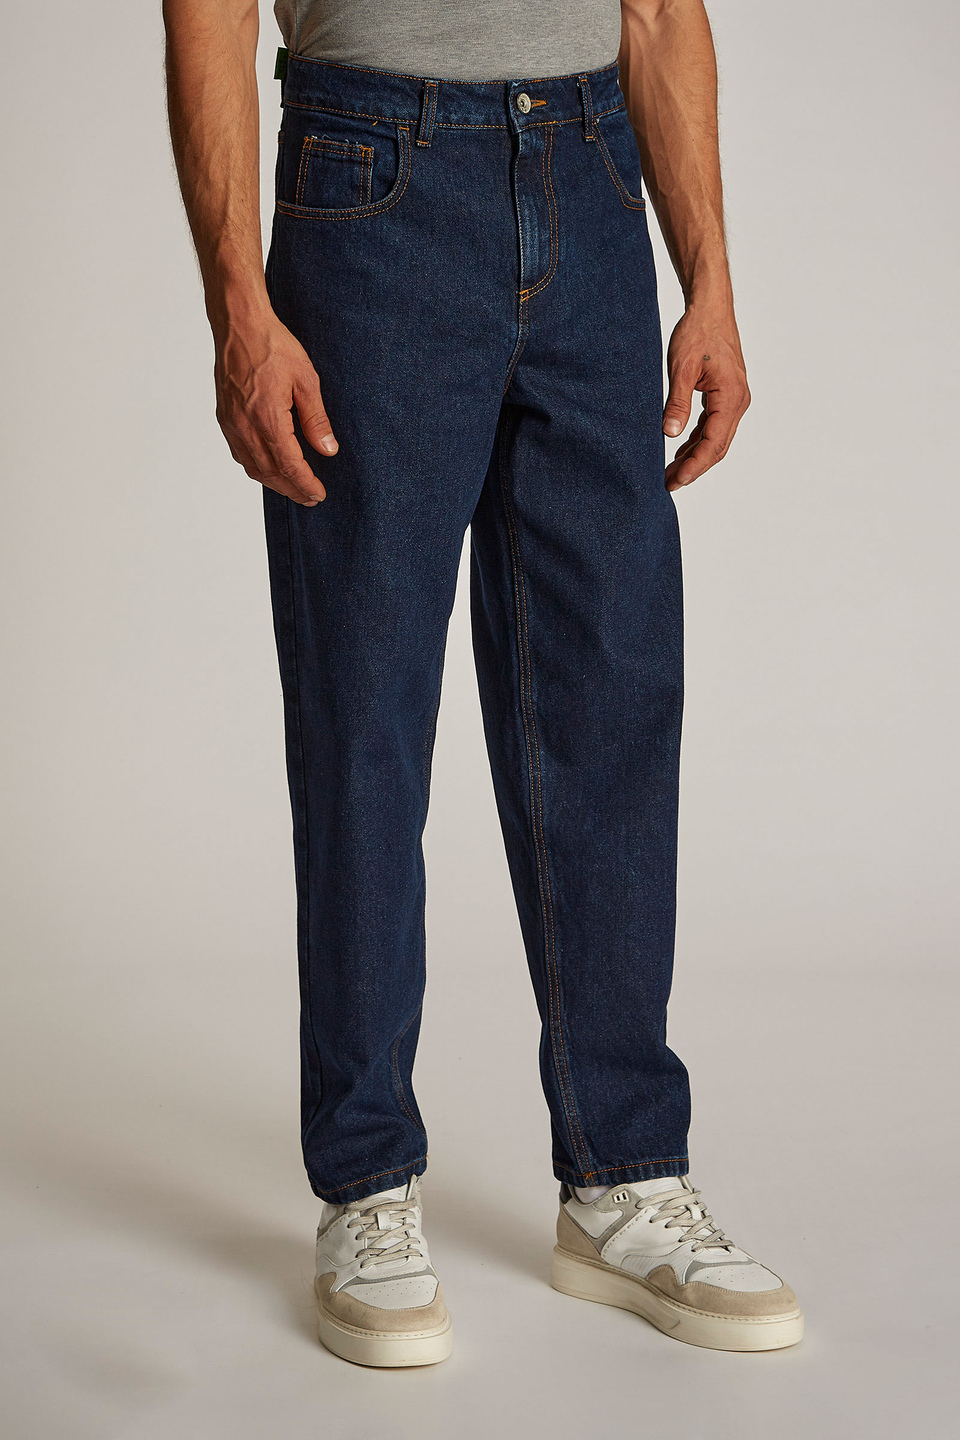 RedTape Men's Cotton Jeans | Skinny Jeans | Comfortable Jeans for Men |  RDM0157